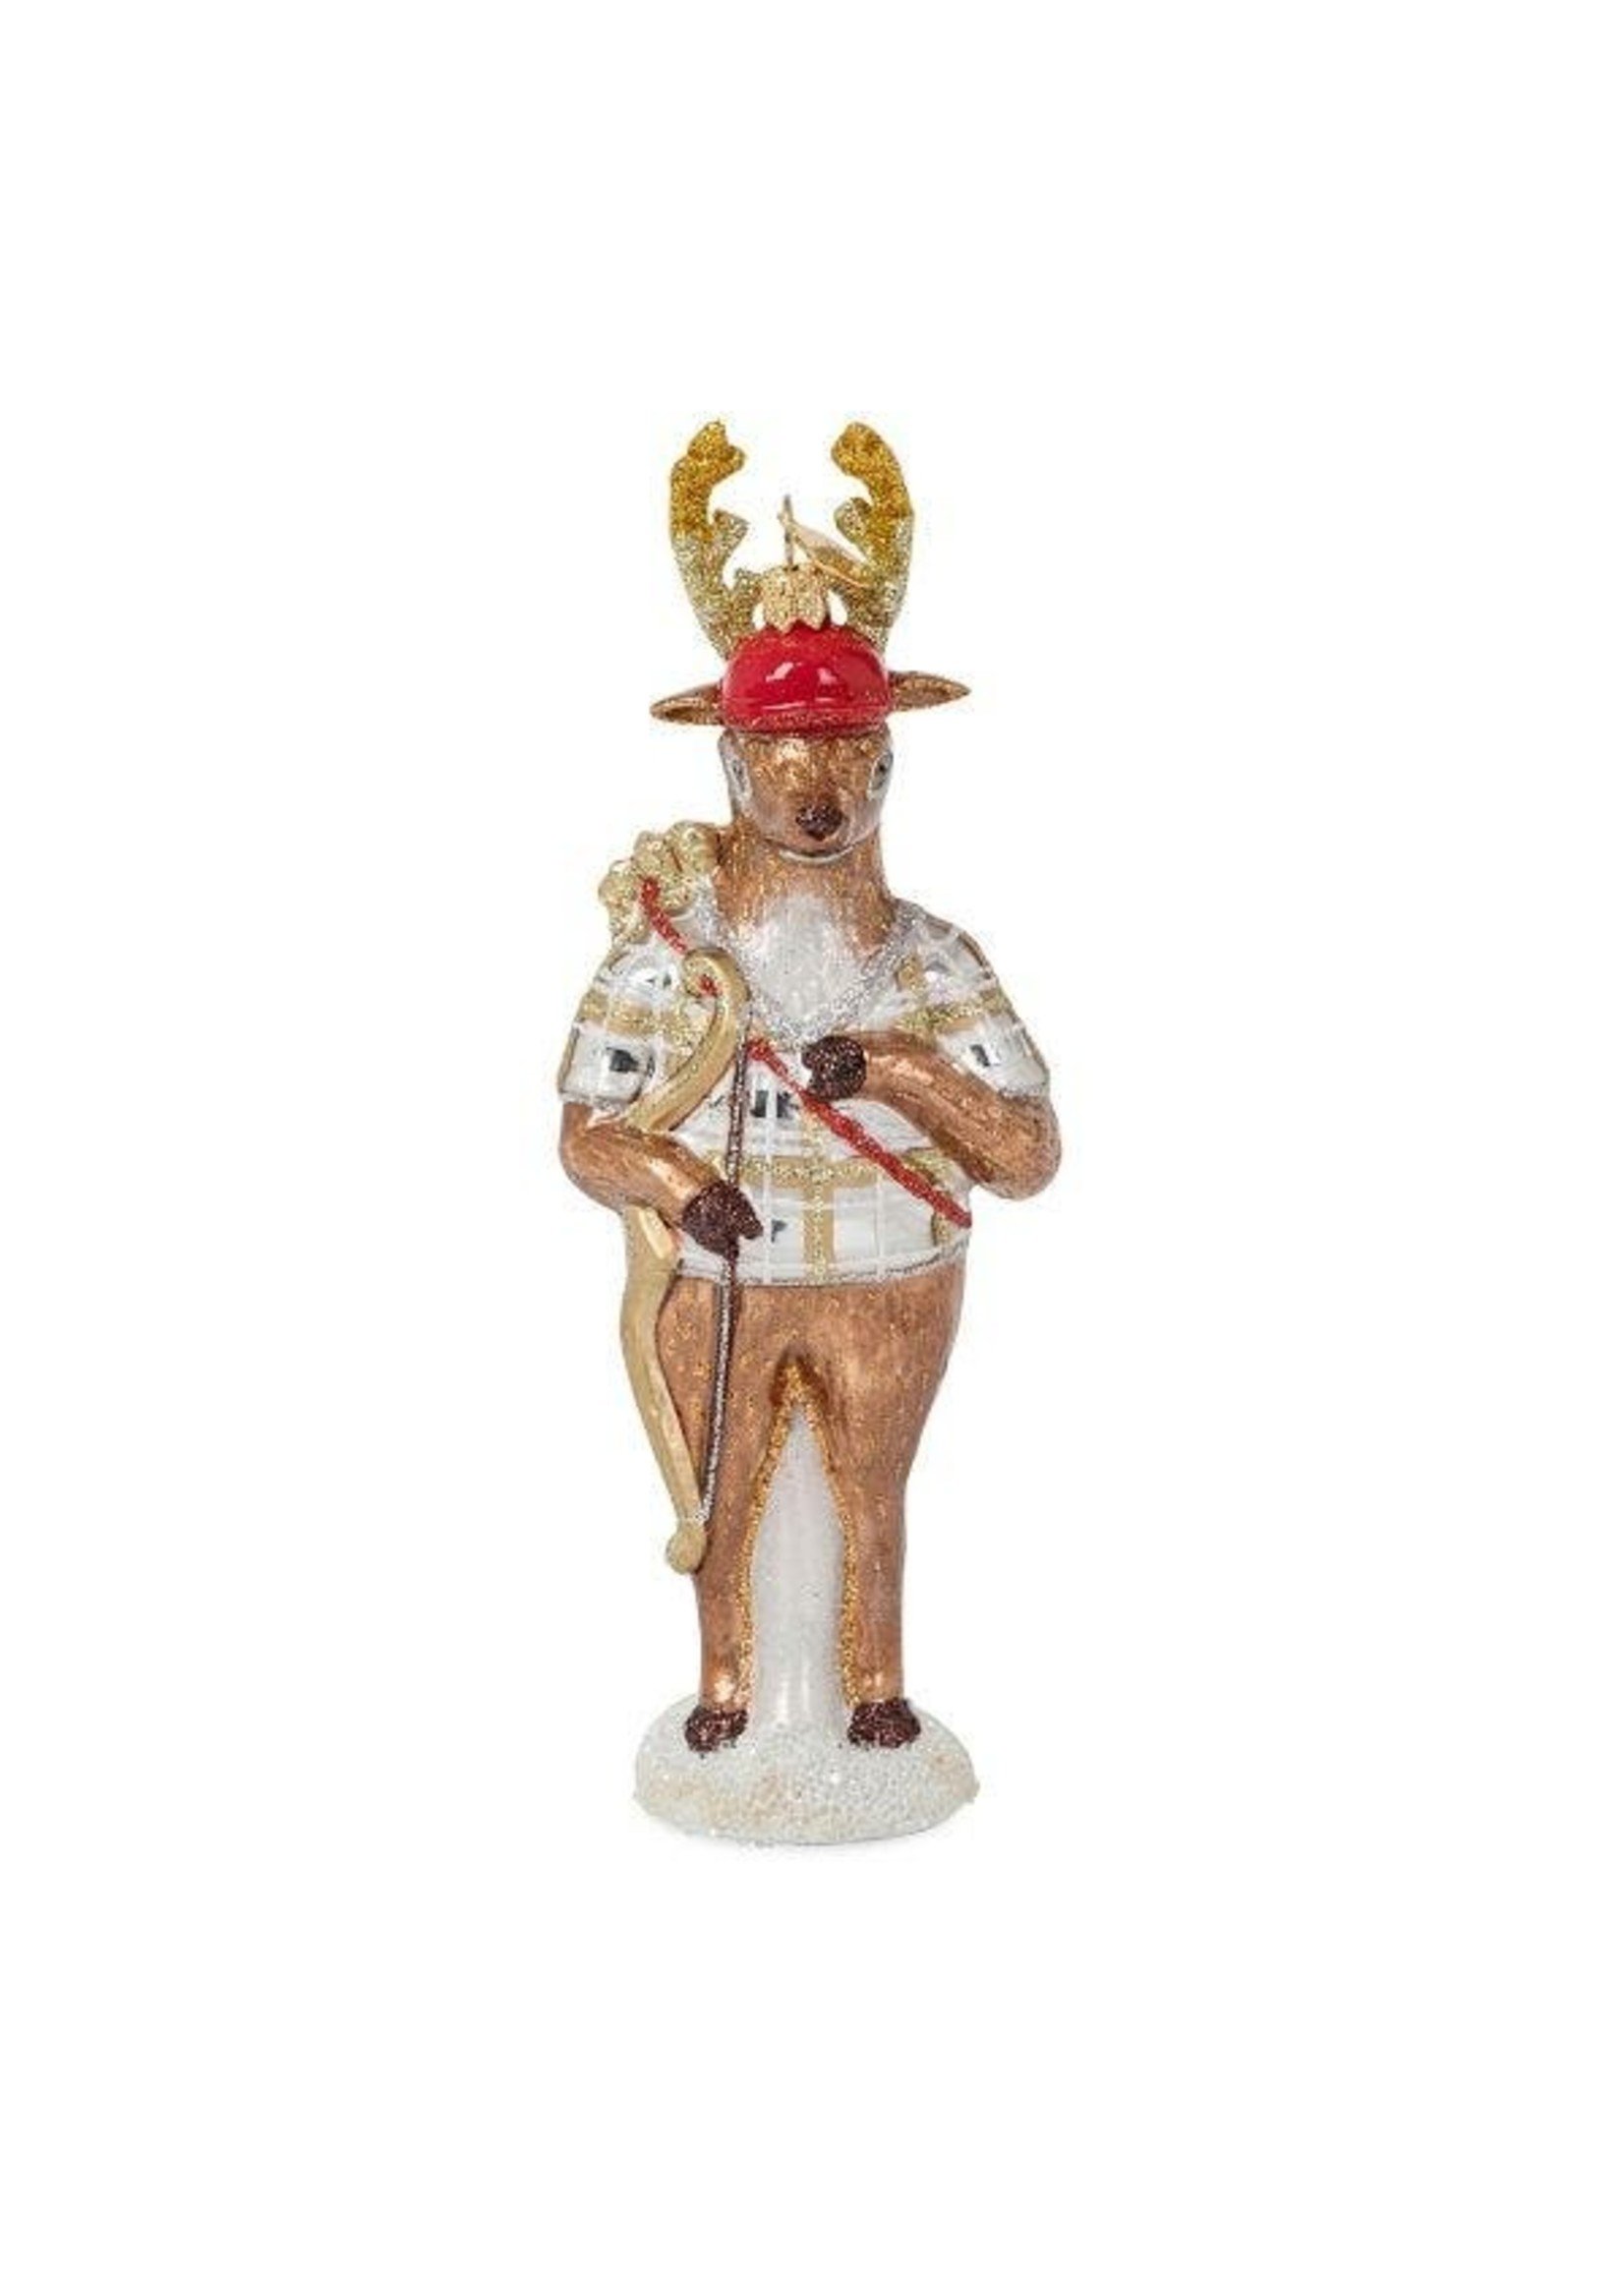 Juliska Ornament - Cupid the Reindeer